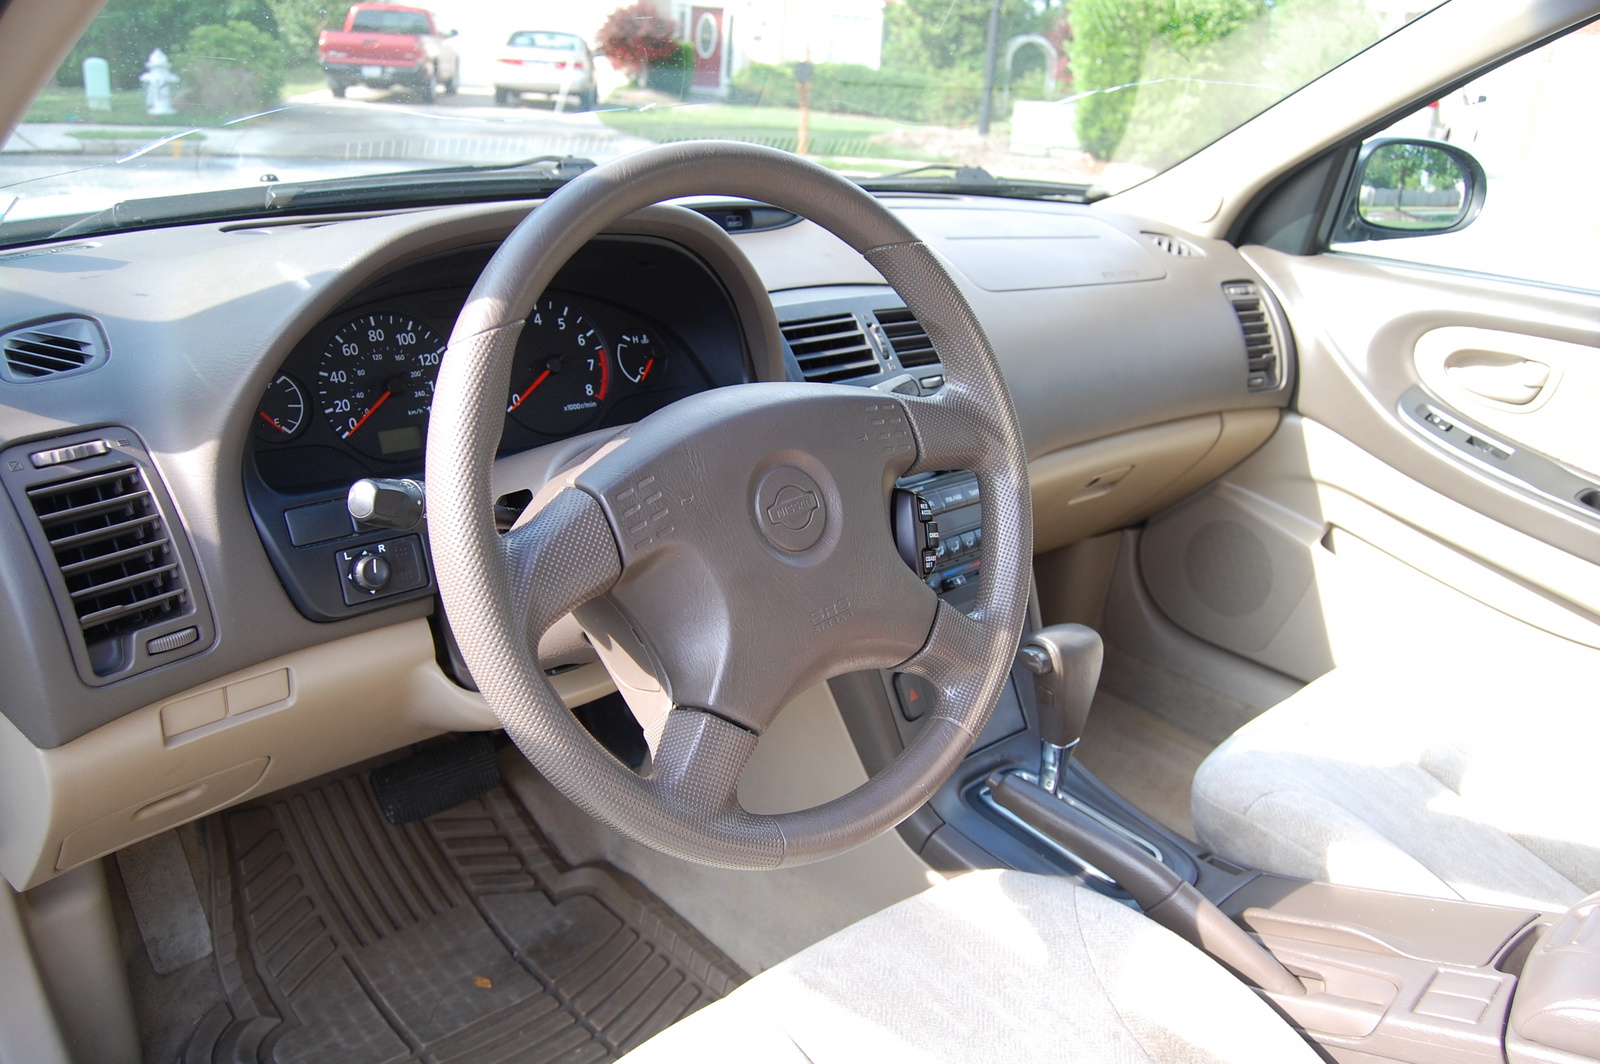 2000 Nissan maxima gle interior #1